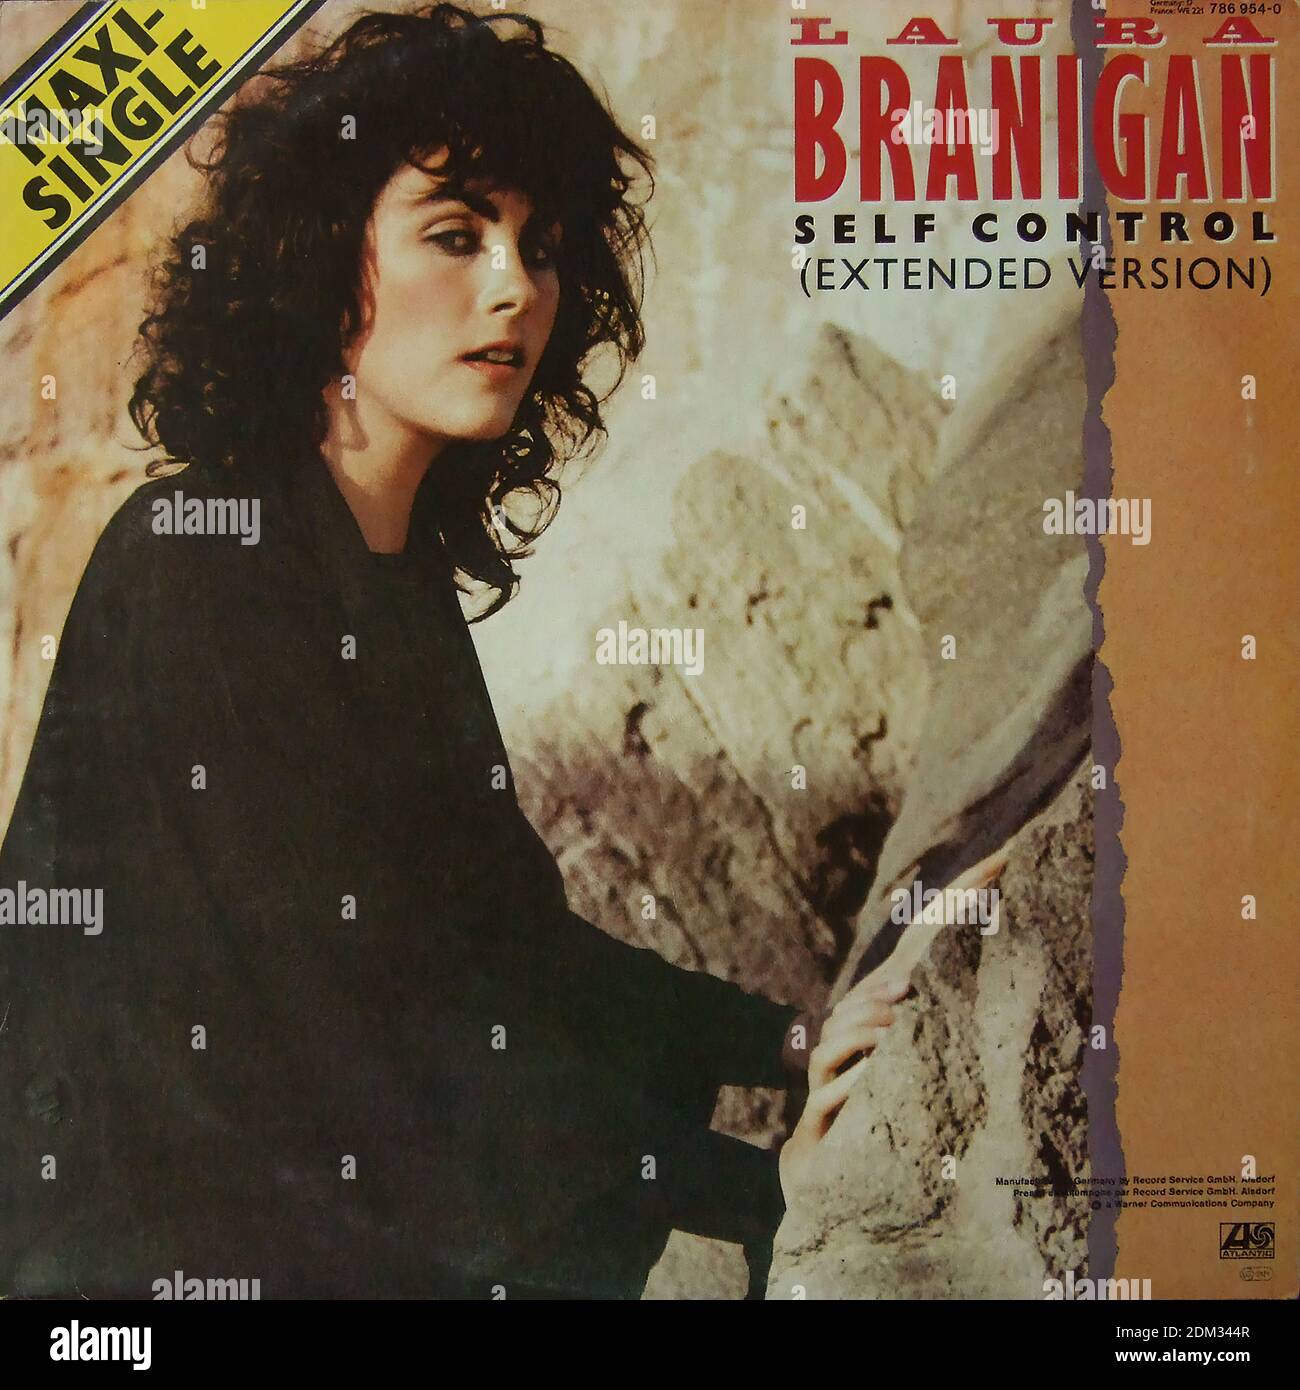 Laura Branigan – Selbstkontrolle (Erweiterte Version) Maxi Single 45rpm - Vintage Vinyl Album Cover Stockfoto